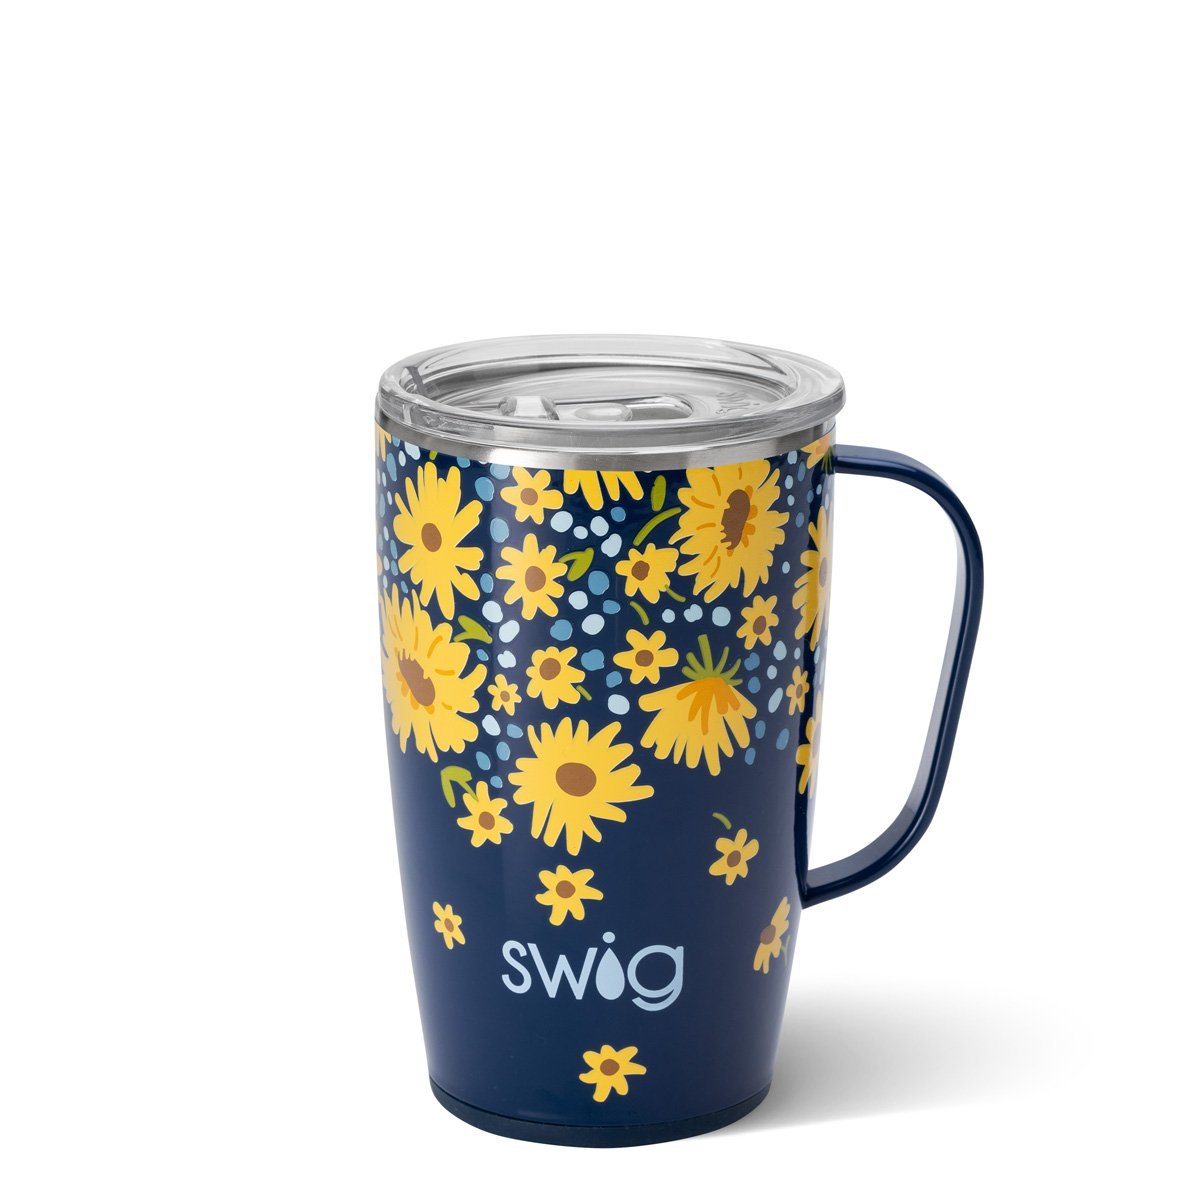 Scout Sweet Tarts Travel Mug 22oz Swig - Chick A D's